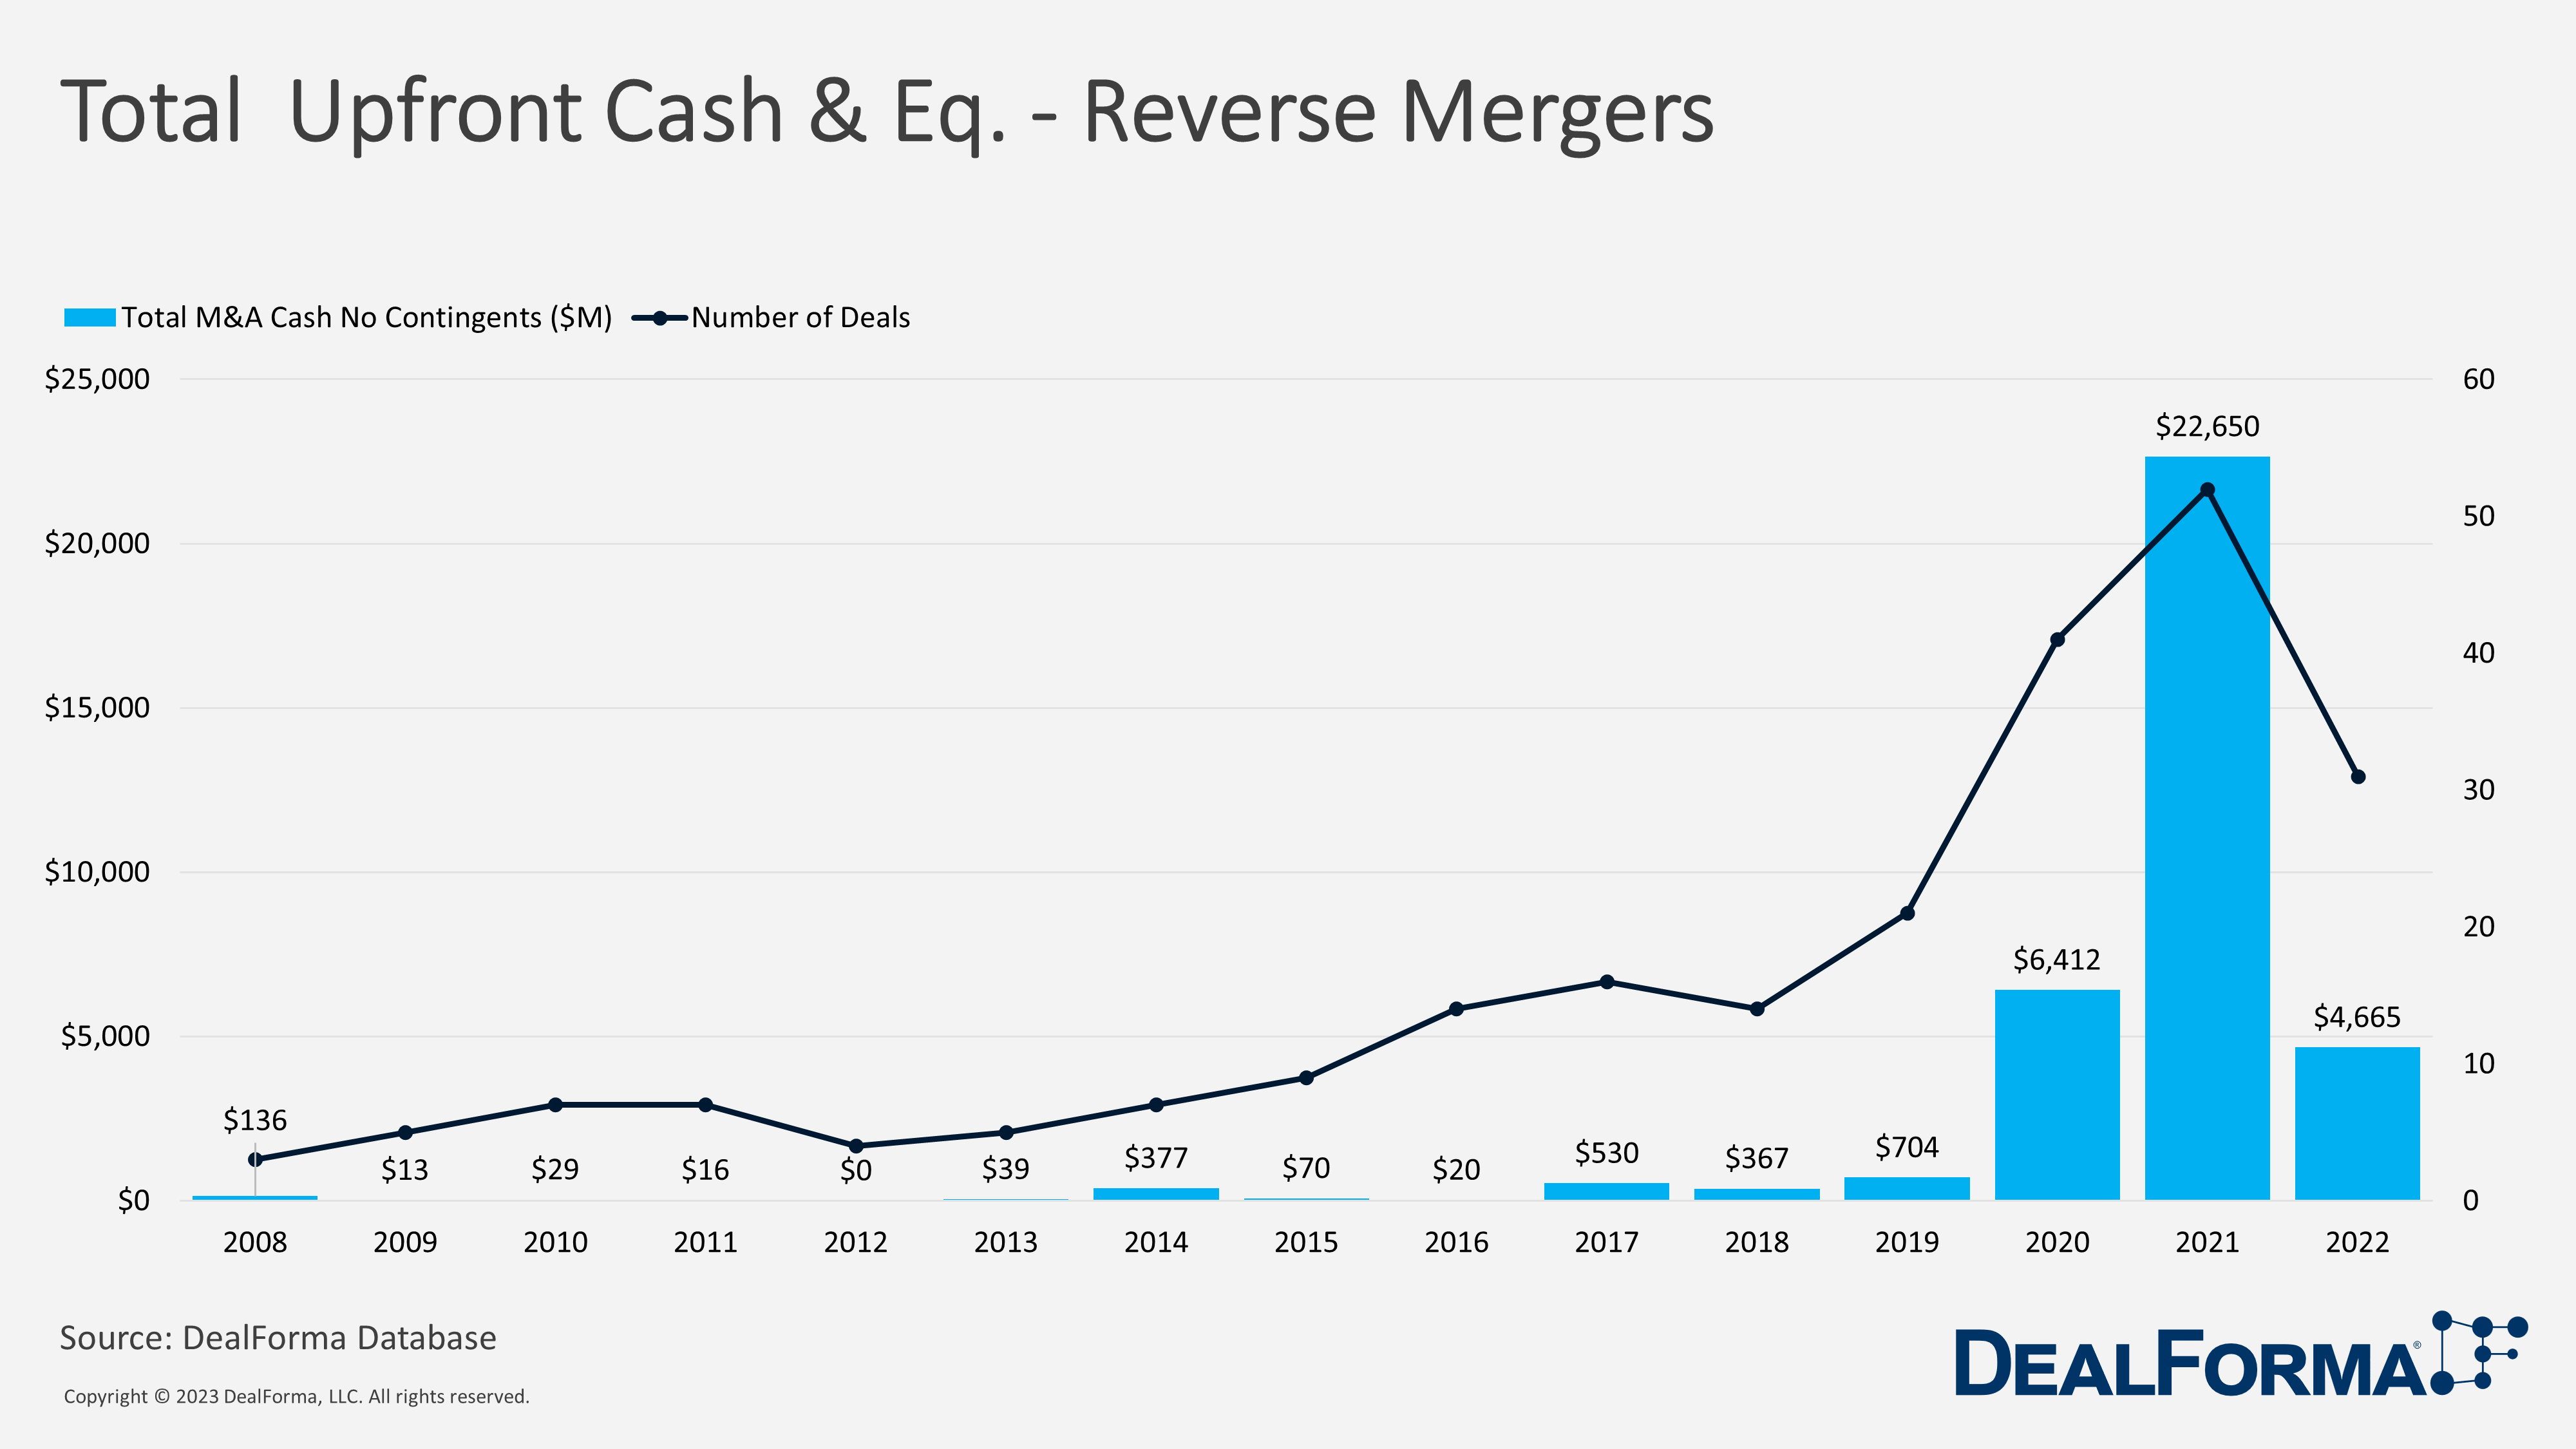 Total Upfront Cash & Eq. - Reverse Mergers